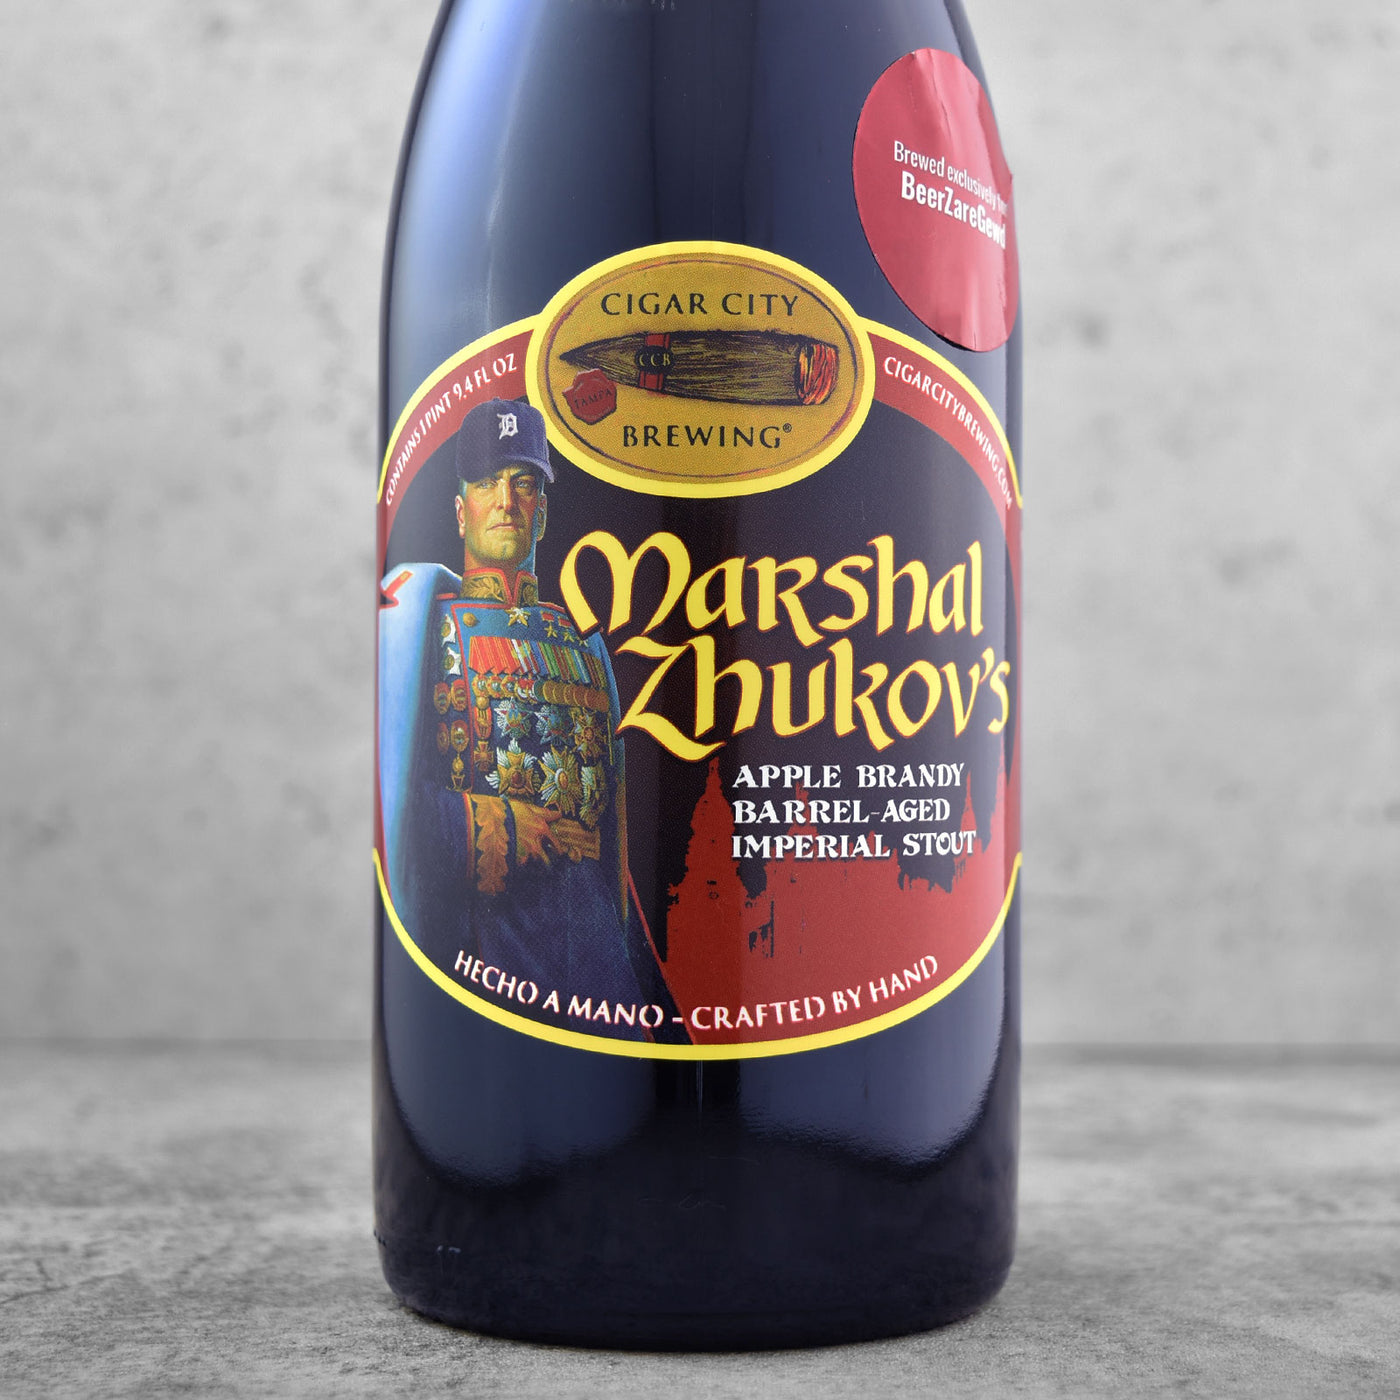 (RARE) Cigar City Marshal Zhukov's Apple Brandy Barrel Aged Imperial Stout (2016)